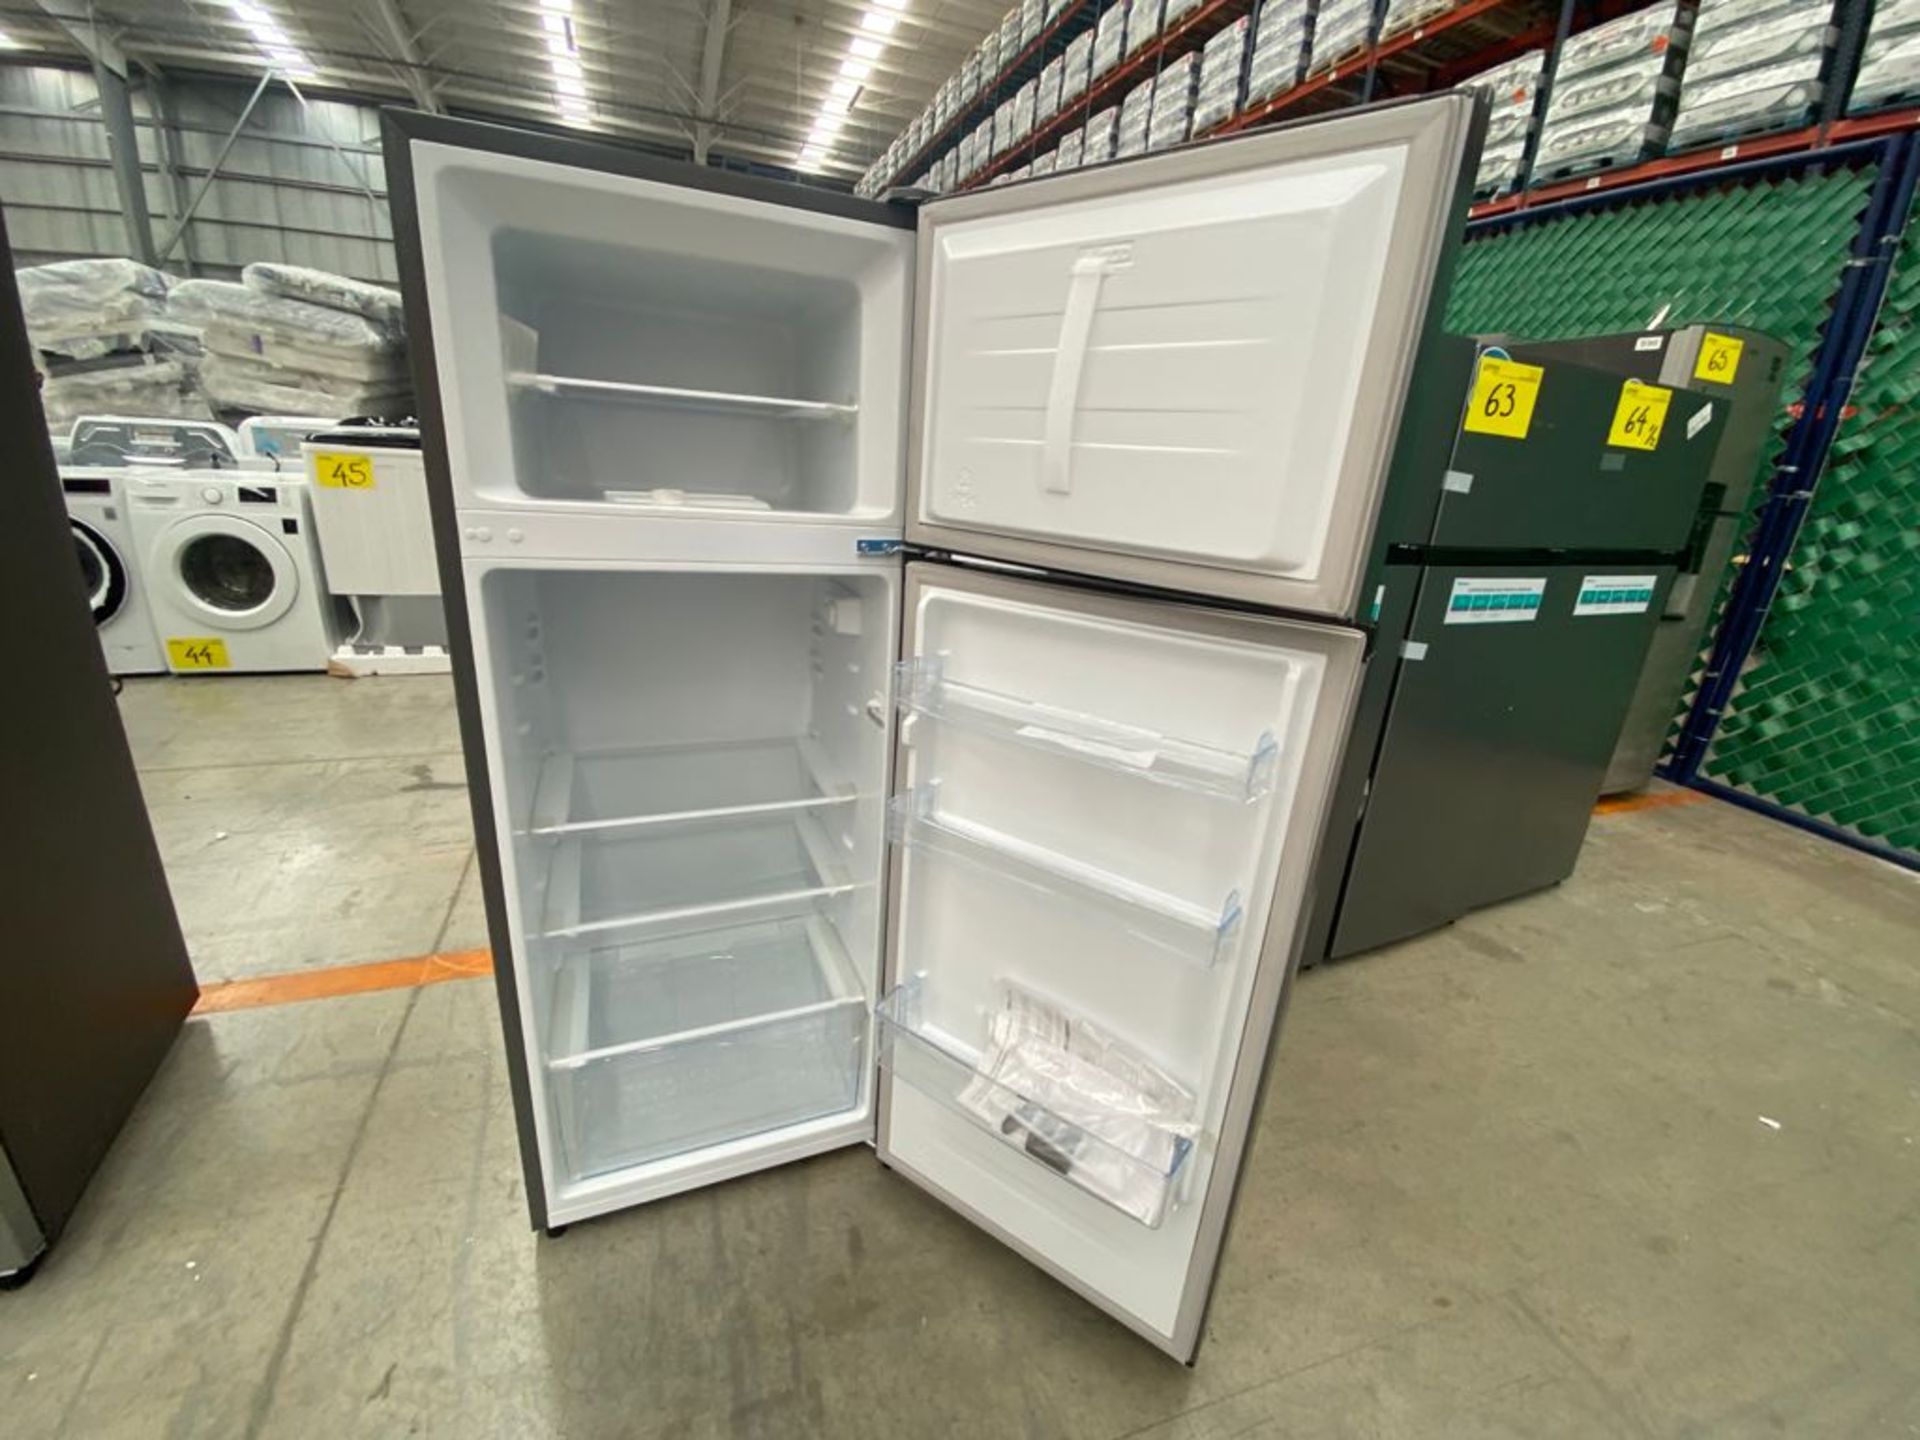 1 Refrigerador marca Hisense color gris modelo RT80D6AWX - Image 18 of 21